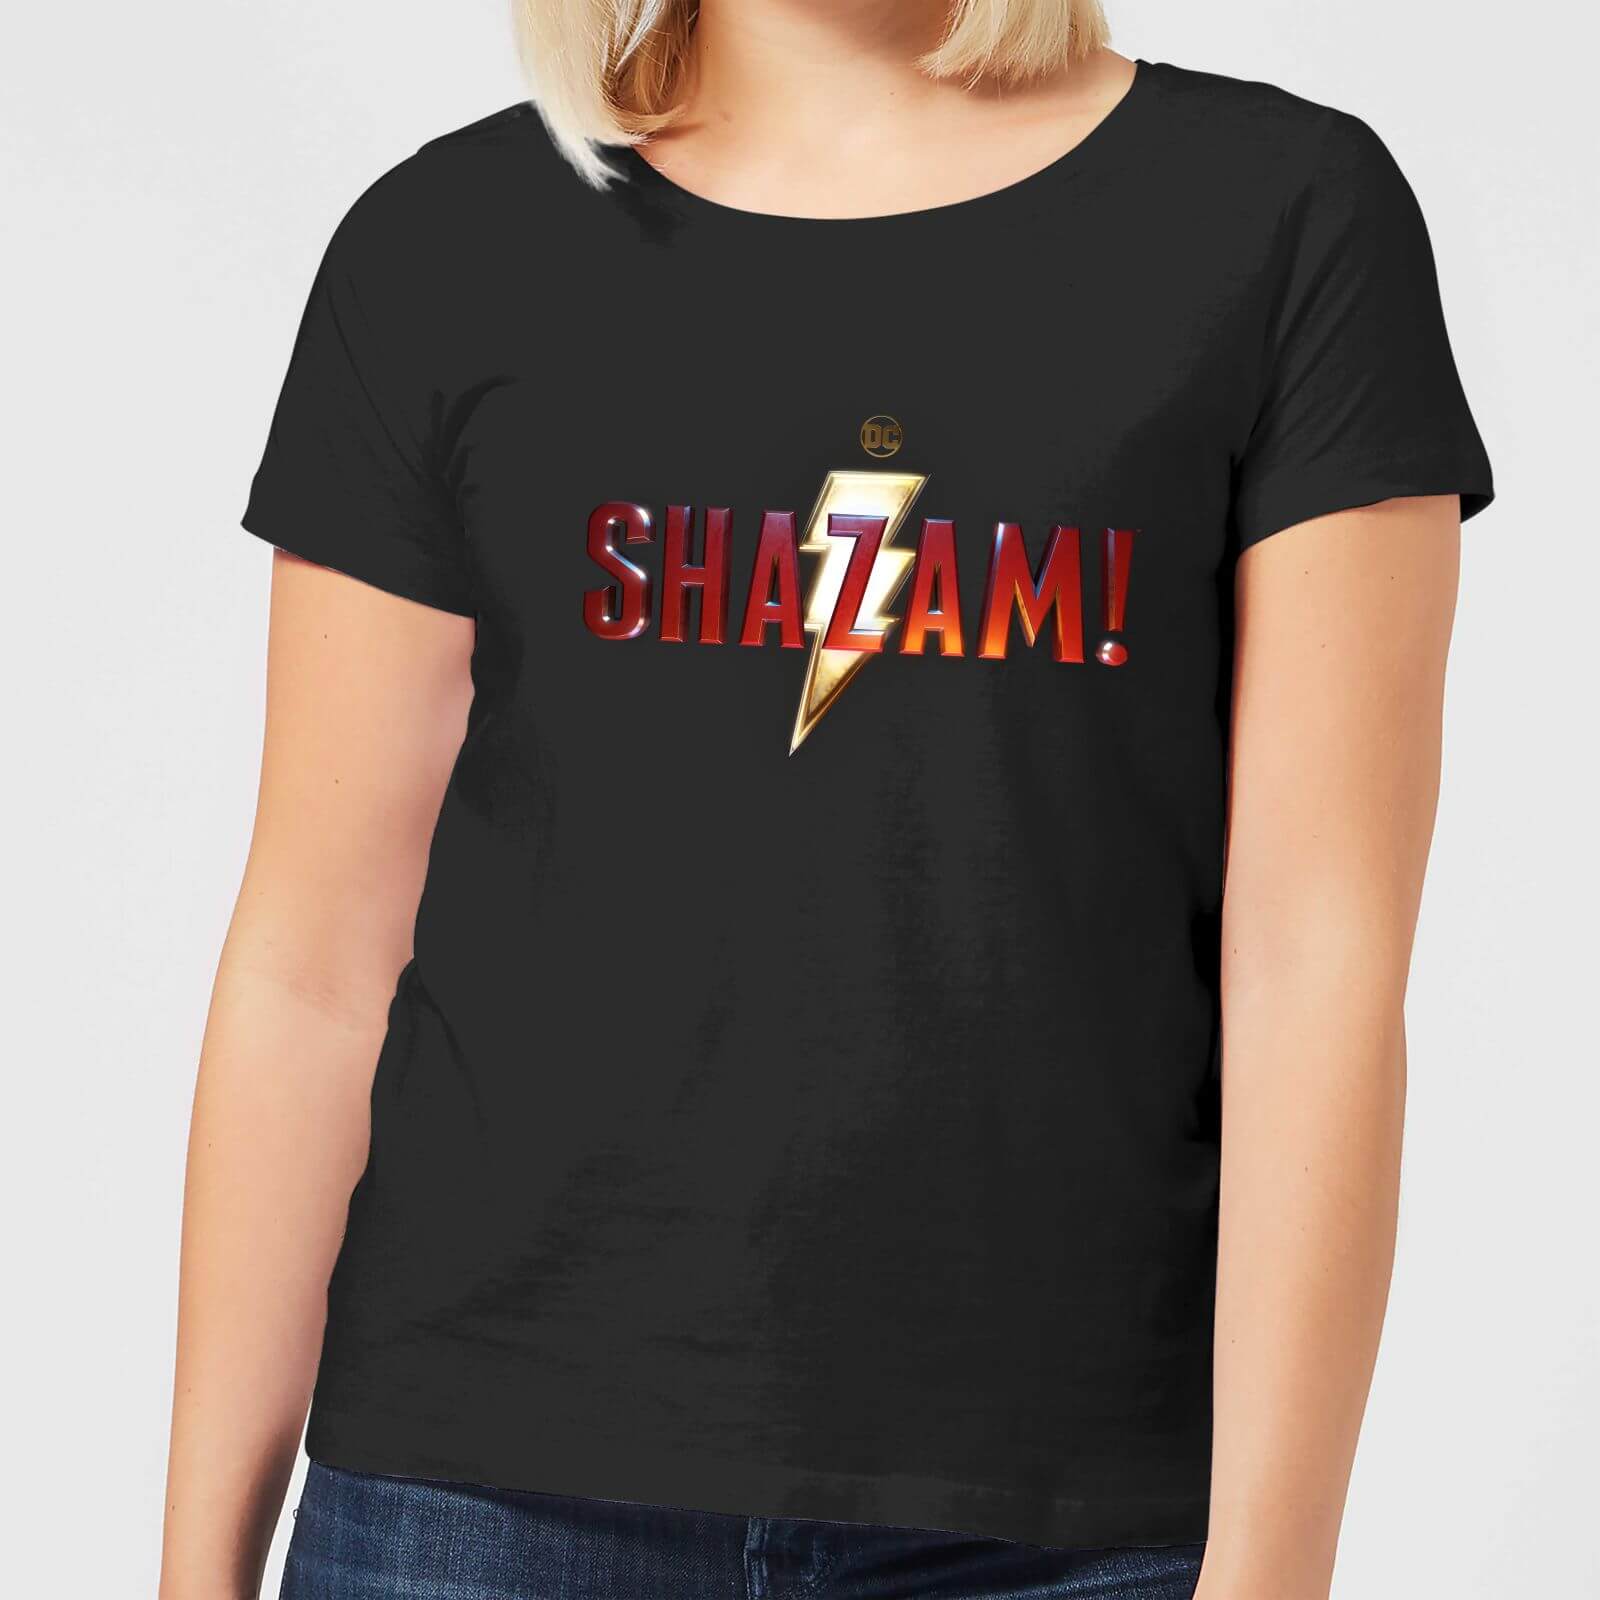 Shazam Logo Women's T-Shirt - Black - S